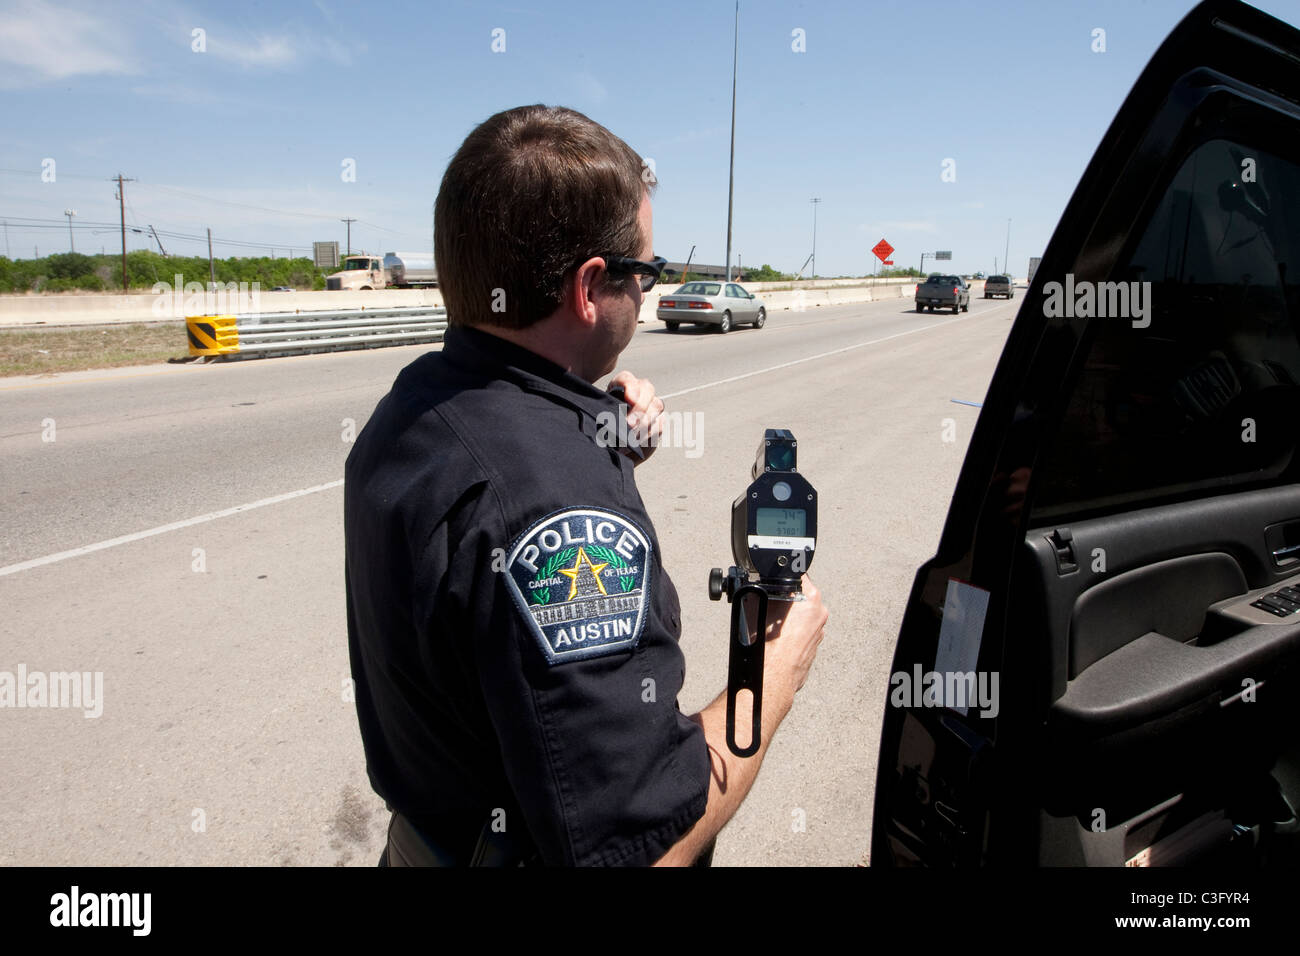 https://c8.alamy.com/comp/C3FYR4/male-police-officer-uses-radar-speed-gun-to-catch-speeding-drivers-C3FYR4.jpg